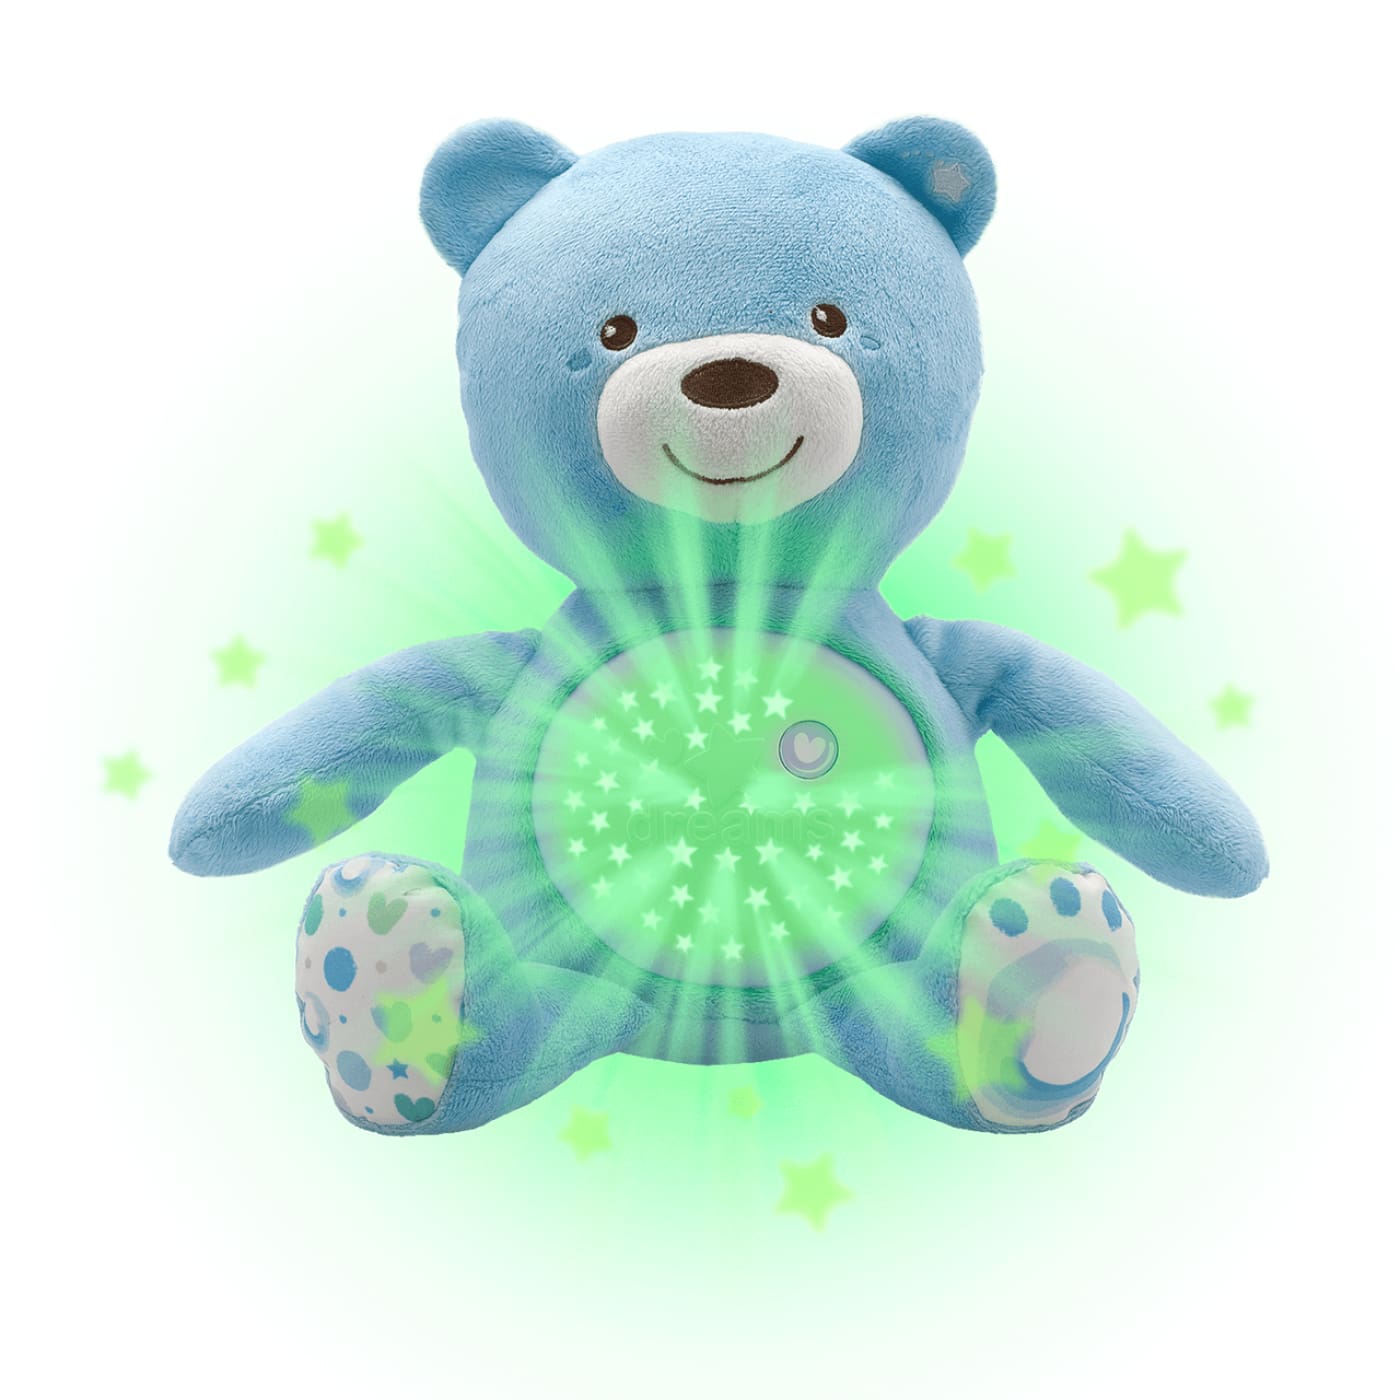 Chicco Baby Bear Soft Toy - Blue - Blue - TOYS & PLAY - PLUSH TOYS/LIGHT&SOUND